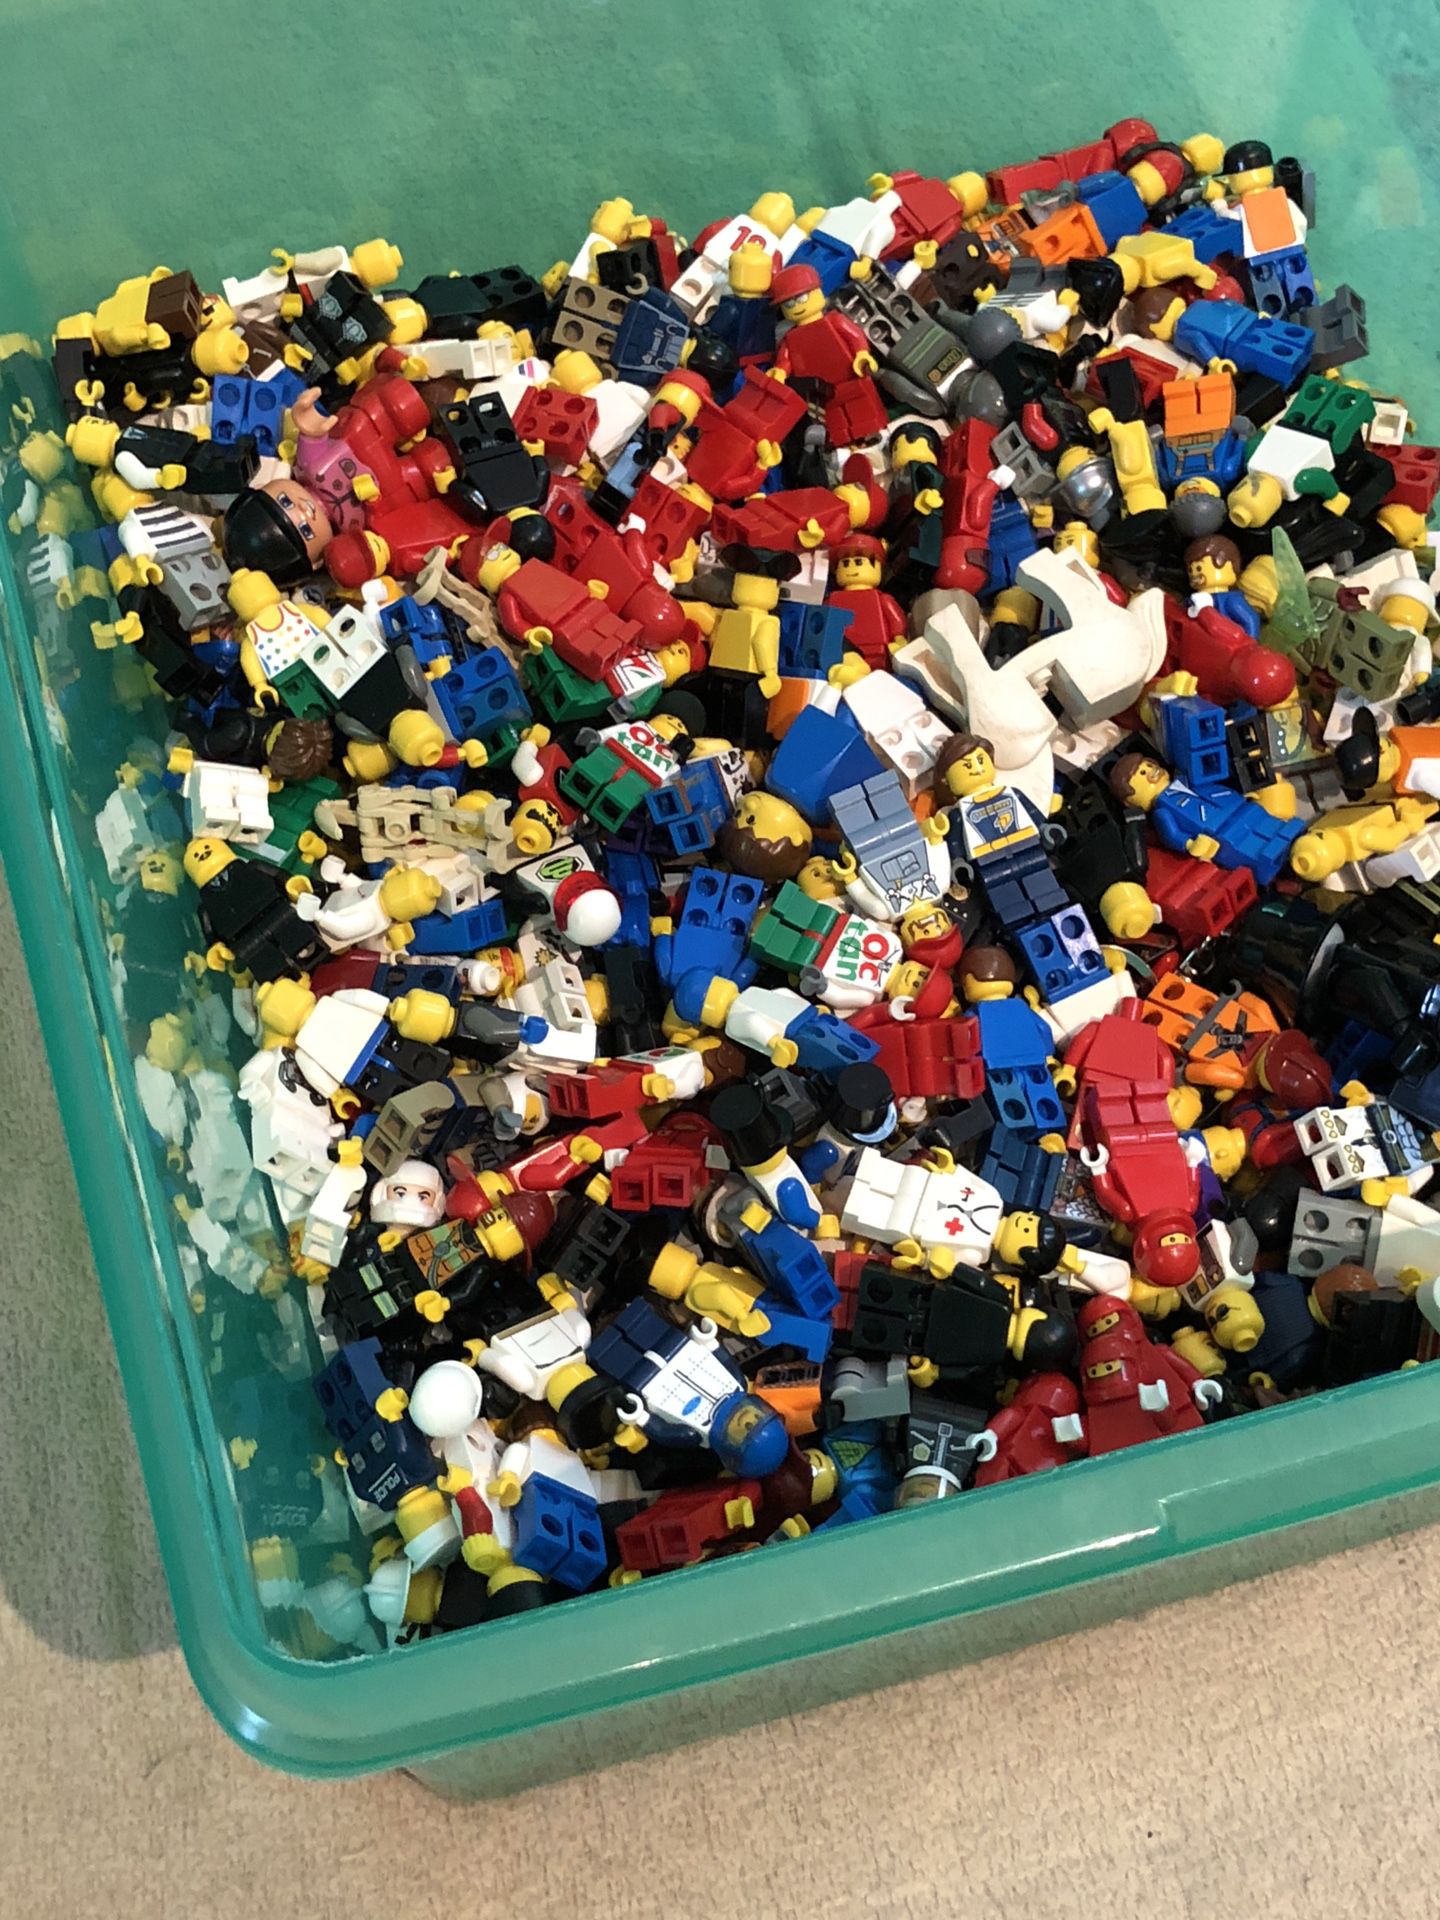 Giant tote of 400 LEGO minifigures!